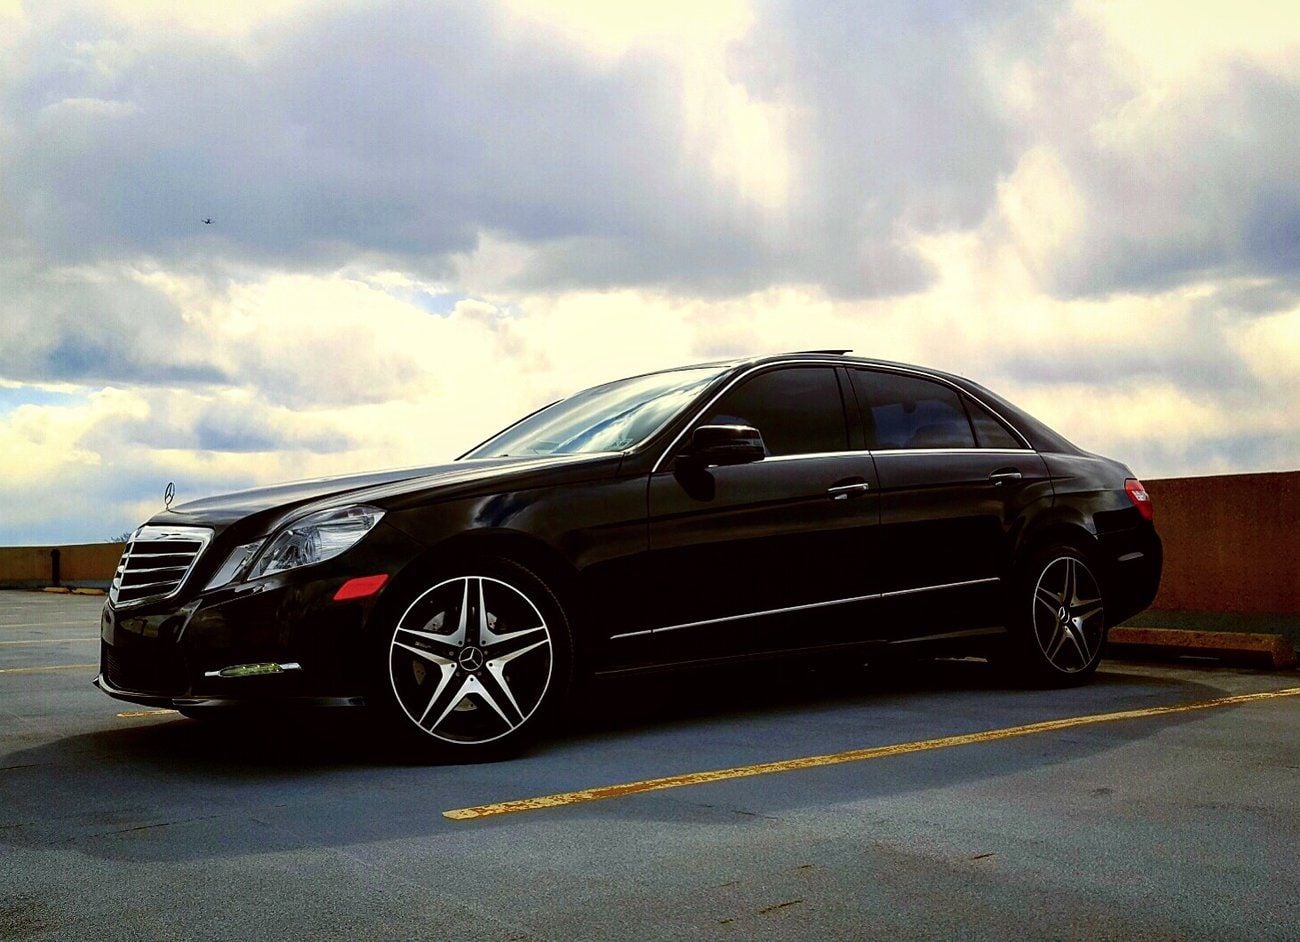 2013 Mercedes-Benz E350 - 2013 E350n Avant-Garde (BANG & OLUFSEN) & MASSAGING SEATS - Used - VIN WDDHF8JB6DA709053 - 53,300 Miles - 6 cyl - 4WD - Automatic - Sedan - Black - Woodland Park, NJ 07424, United States